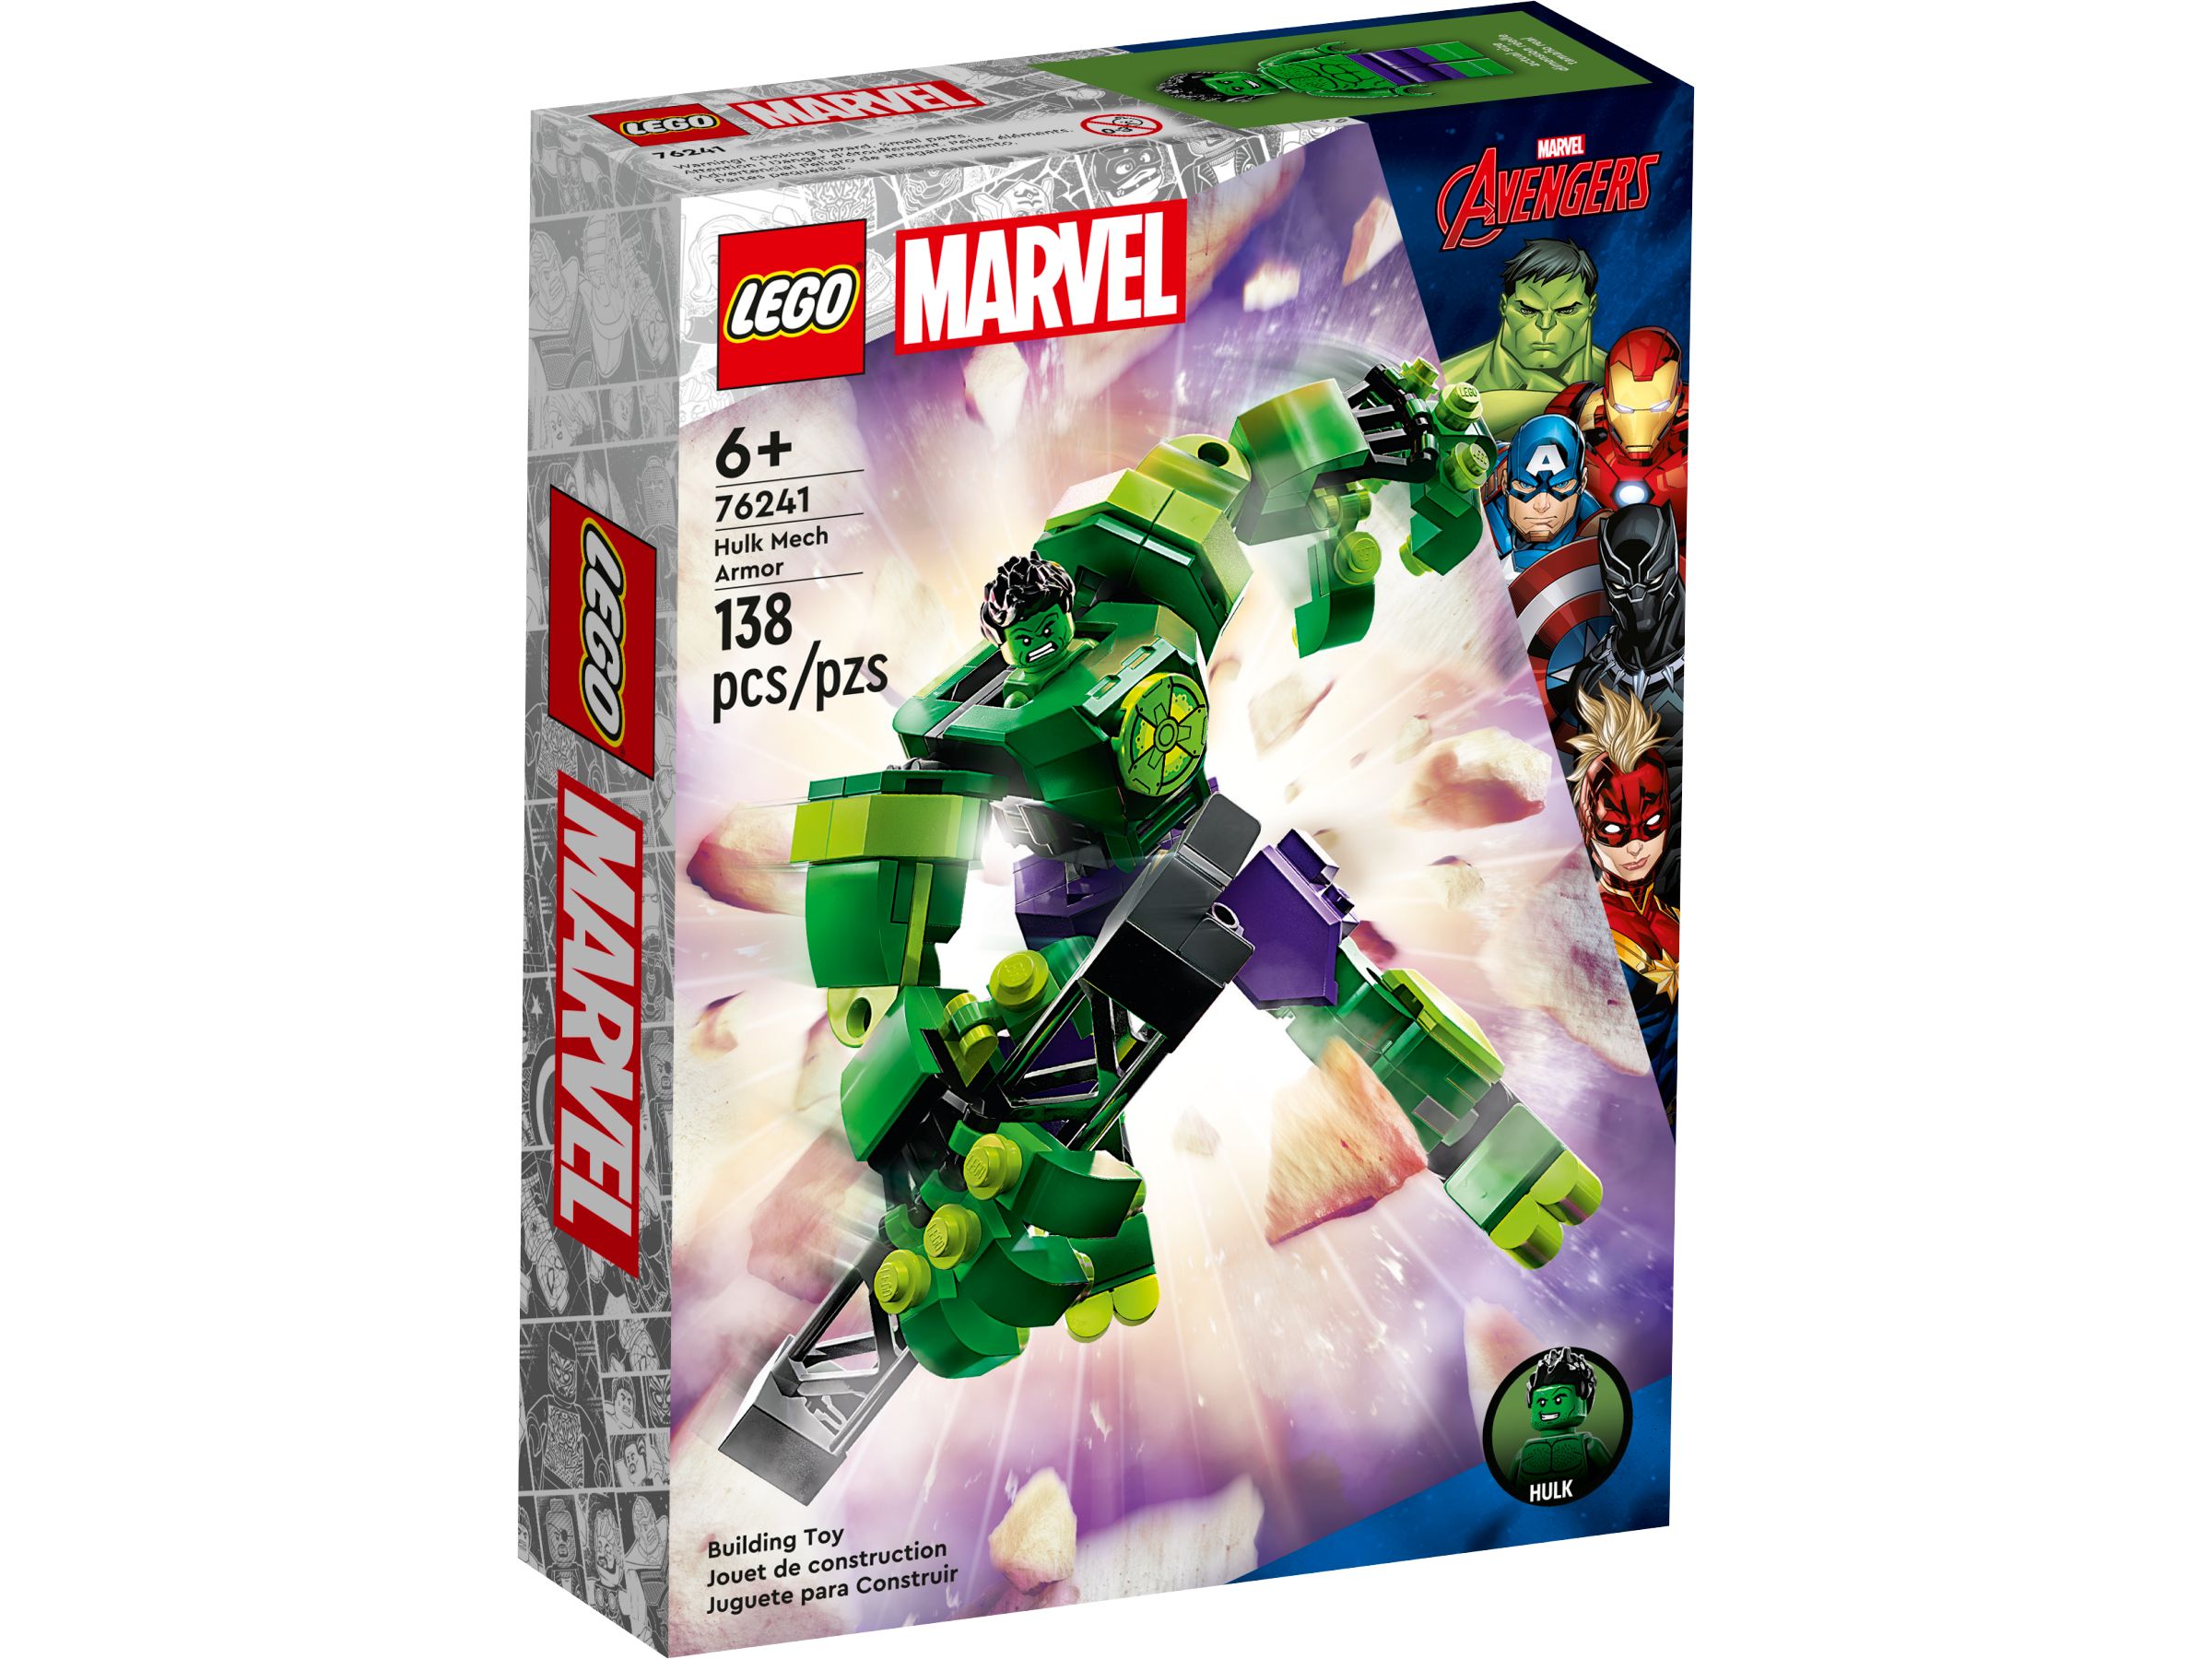 LEGO Super Heroes 76241 Hulk Mech LEGO_76241_alt1.jpg